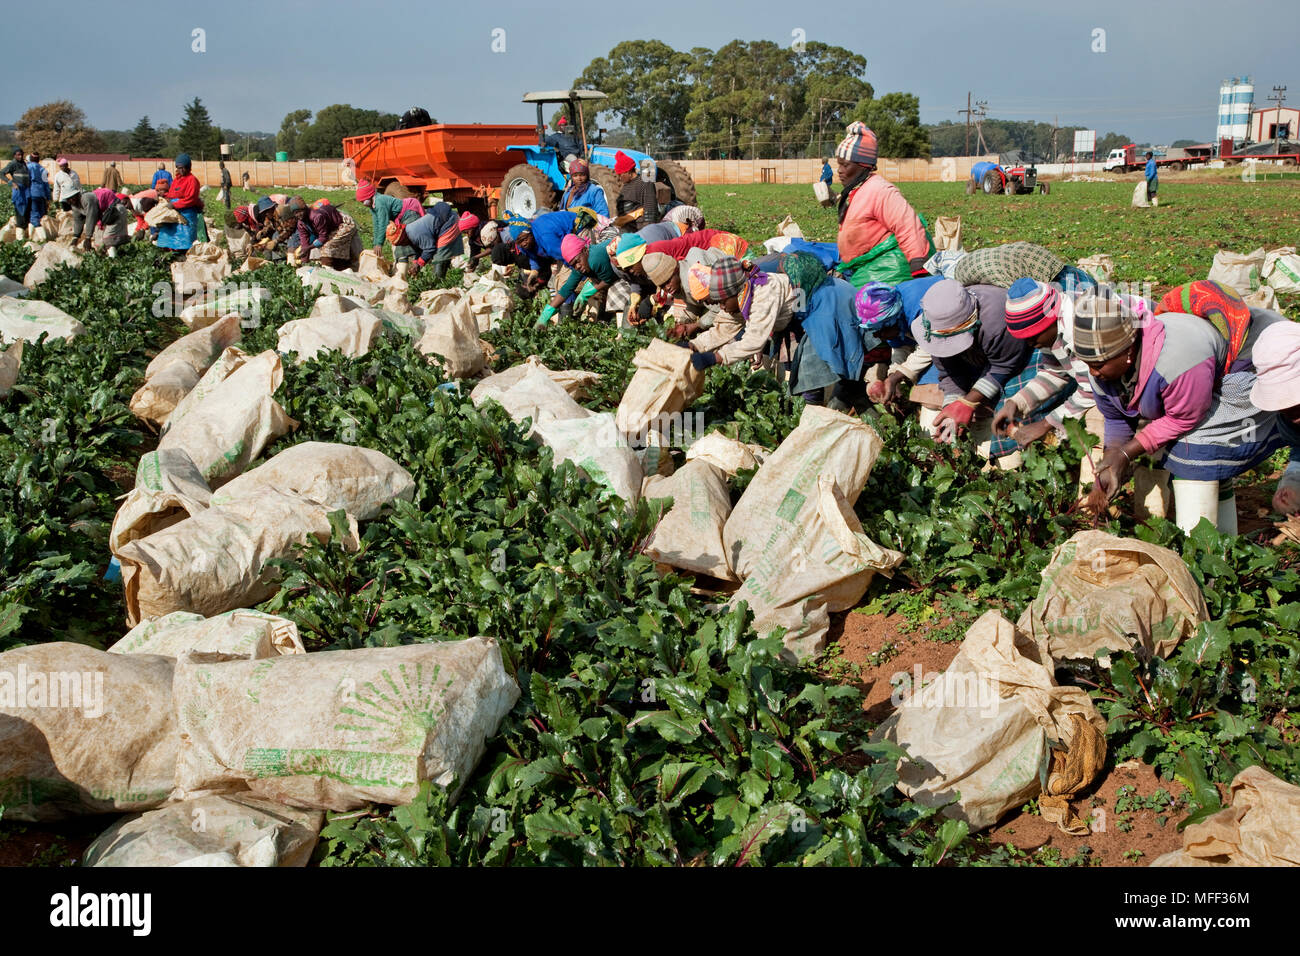 Commercial farming: Workers picking beetroot (Beta vulgaris) Kenya, Africa. Stock Photo